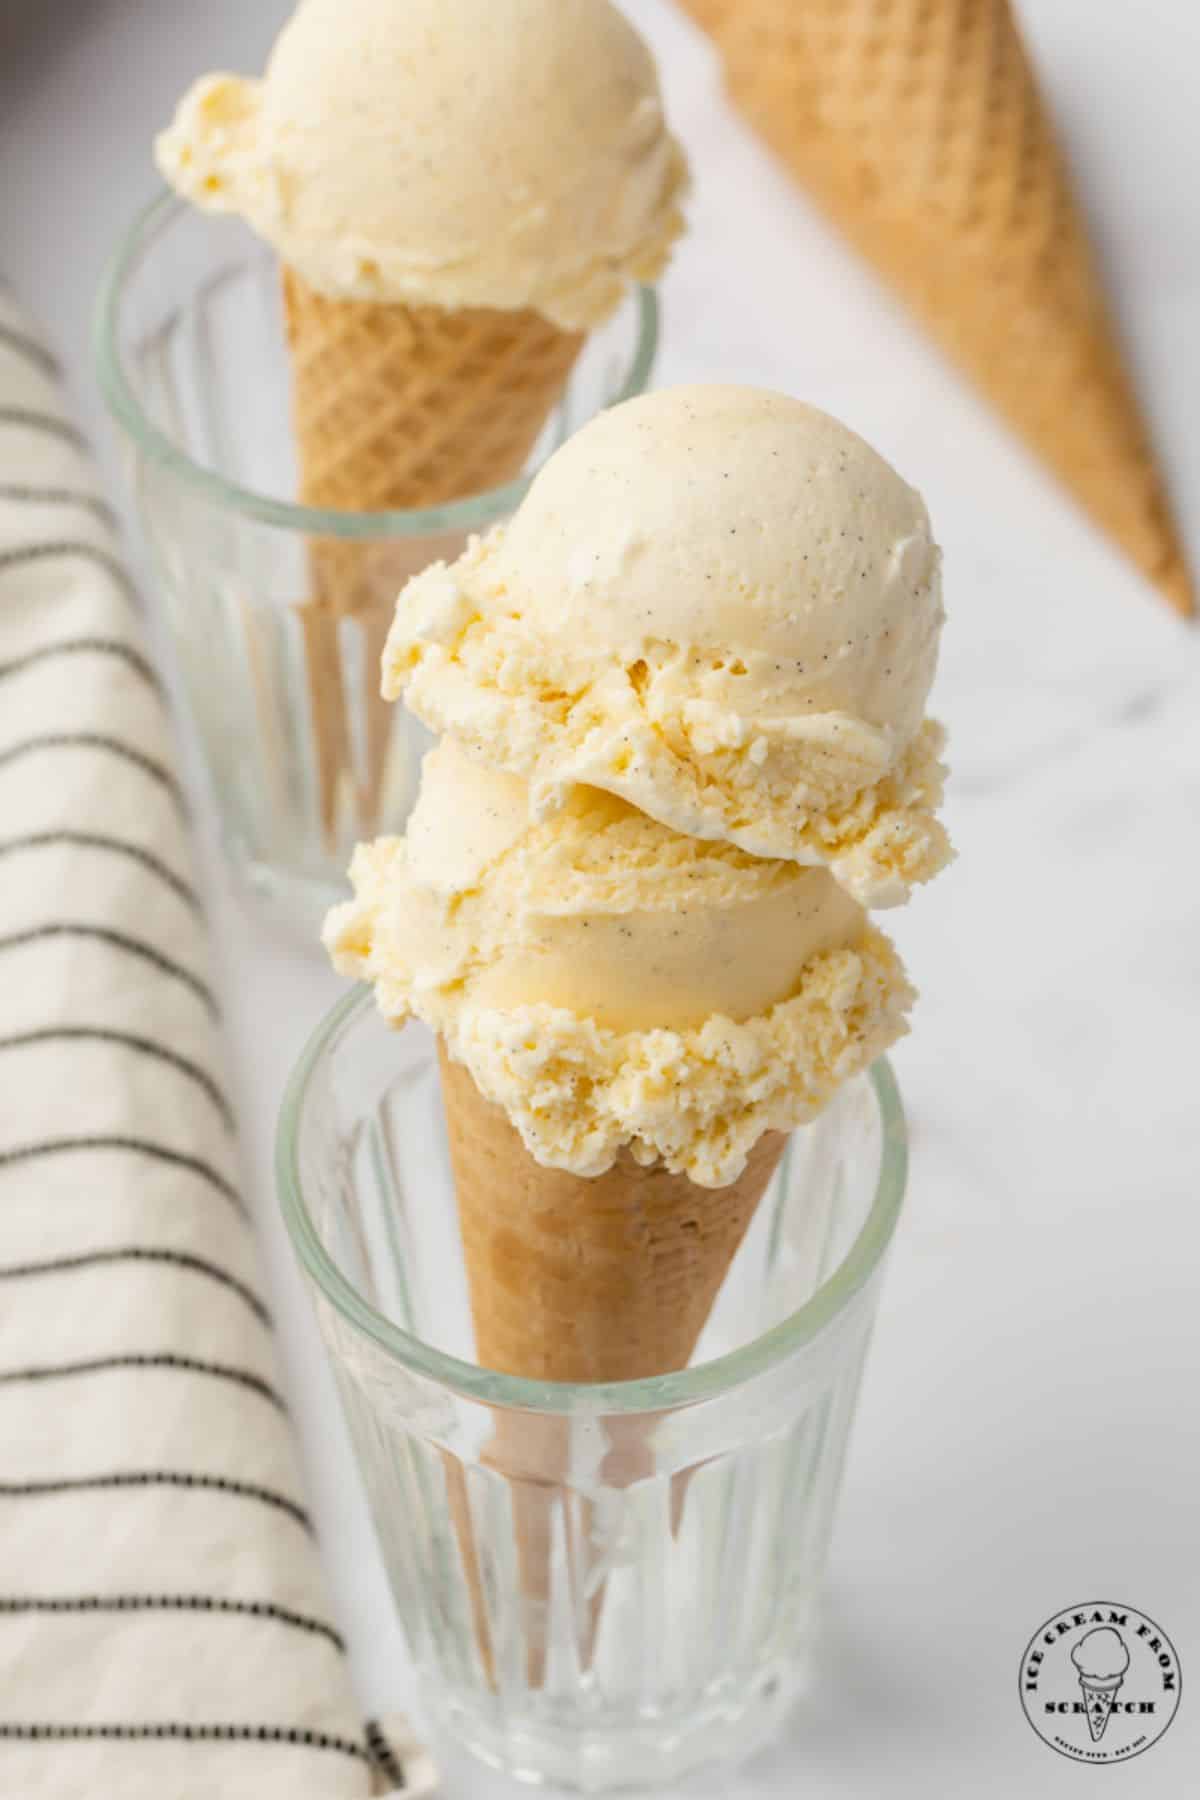 Tasty Yolk-Based Vanilla Ice Cream on two cones.